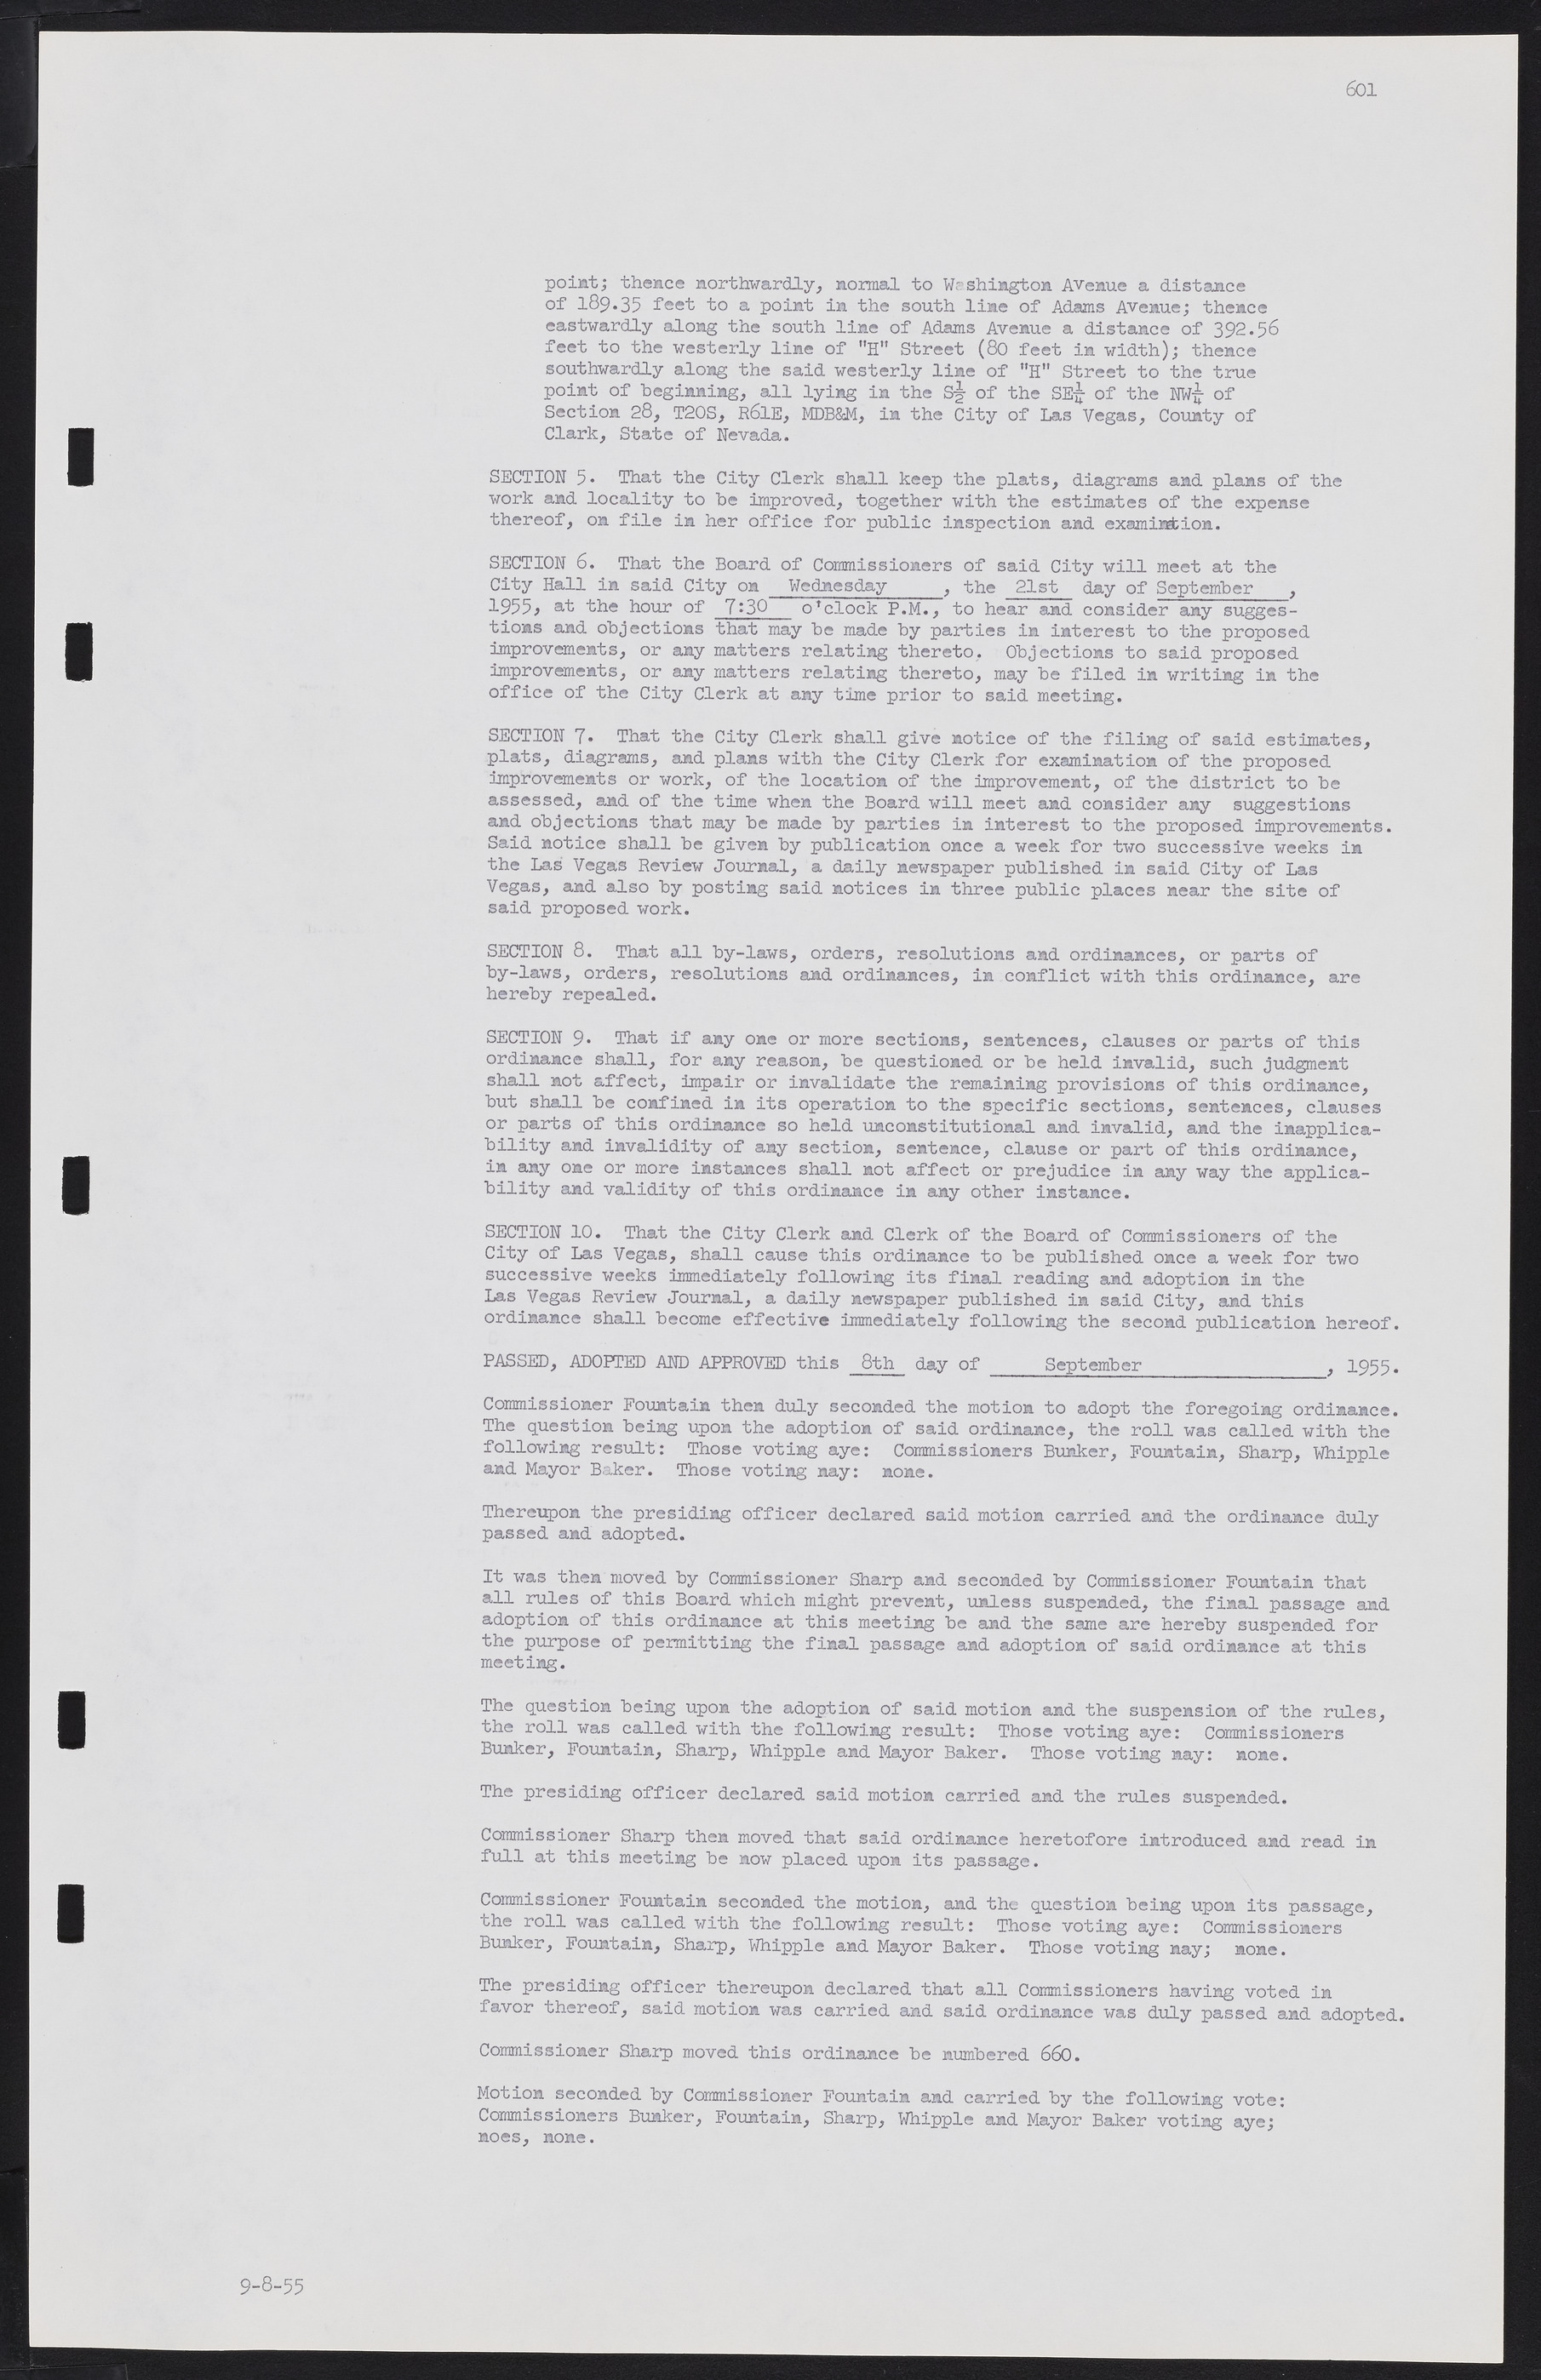 Las Vegas City Commission Minutes, February 17, 1954 to September 21, 1955, lvc000009-607